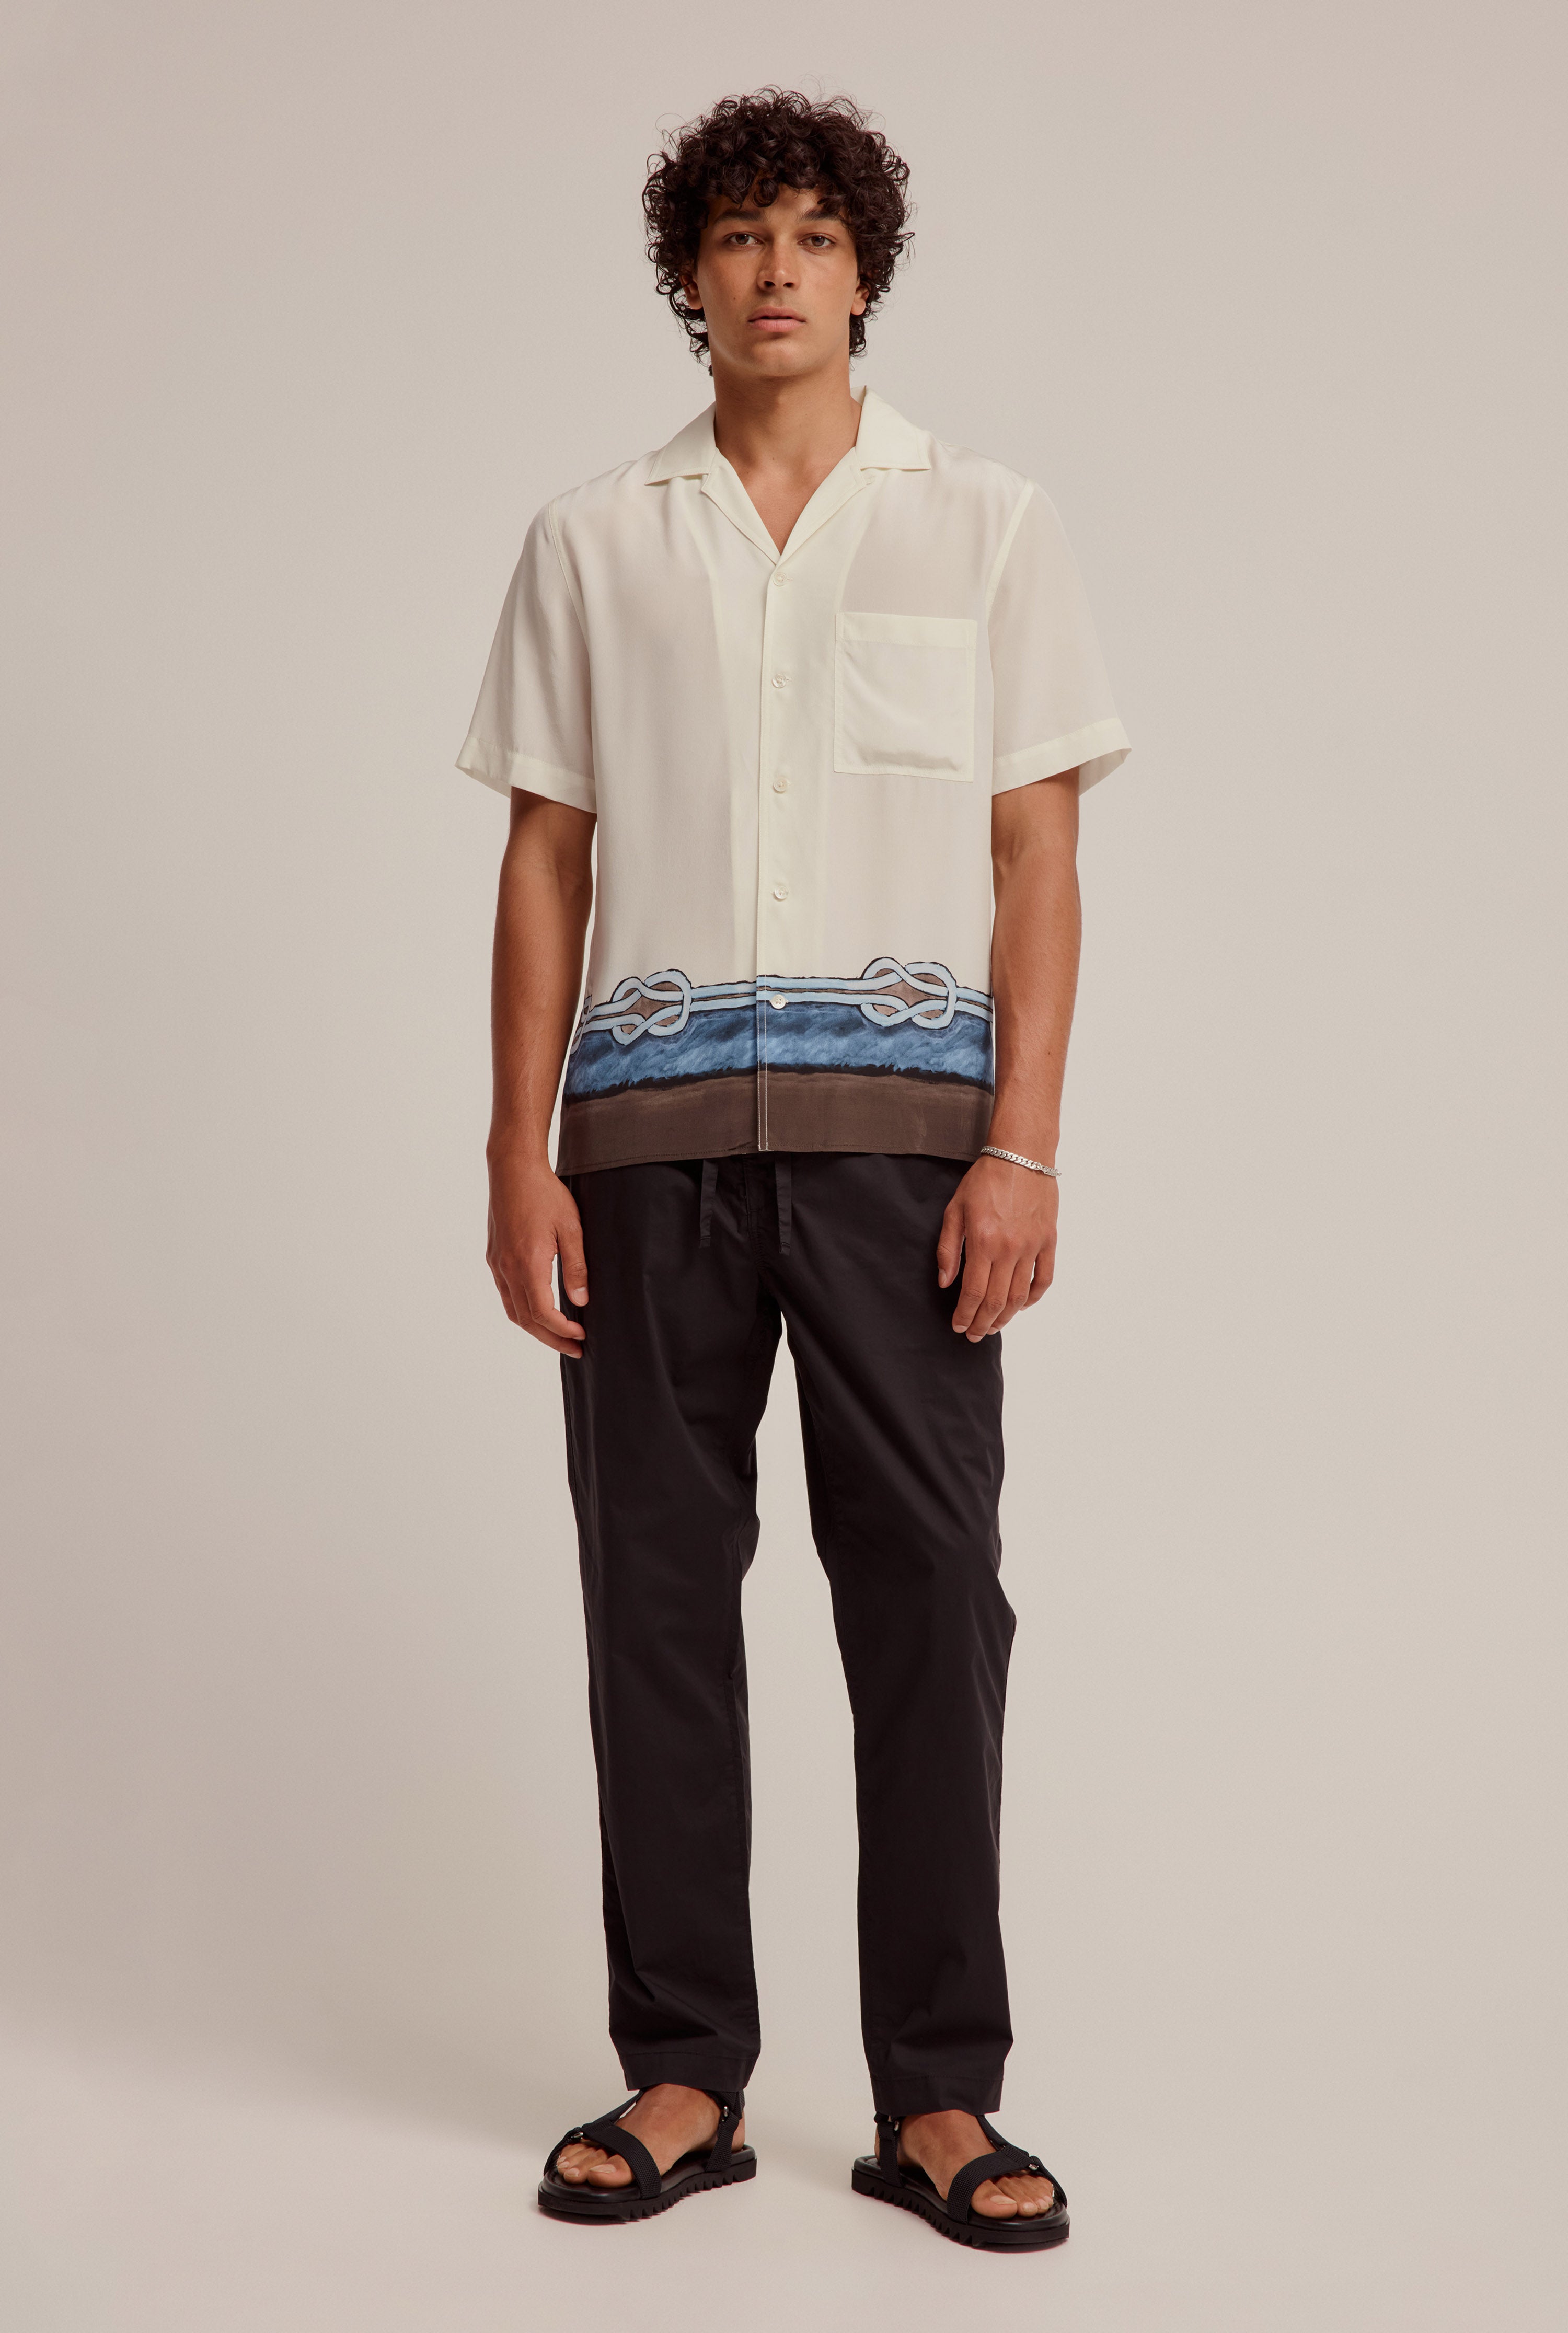 Venroy - Mens Short Sleeve Silk Camp Collar Shirt in Cream Knot Border ...